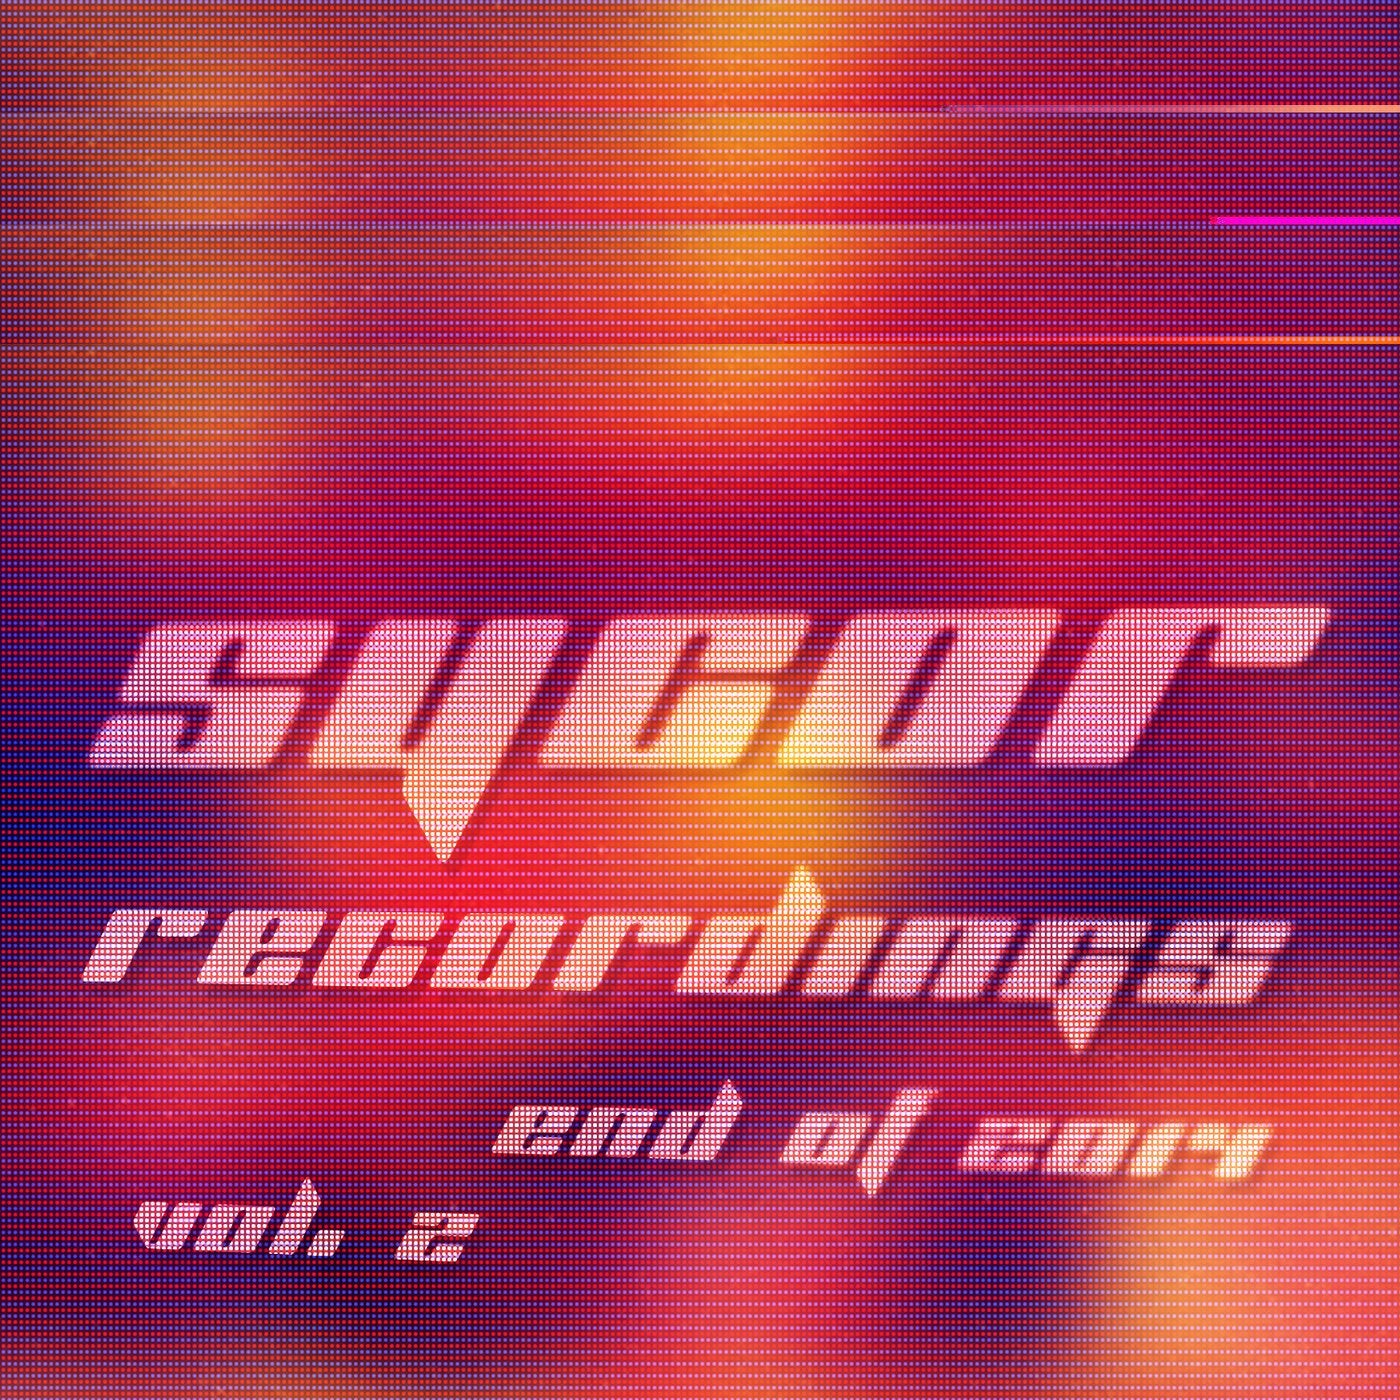 SYCOR RECORDINGS - End Of 2014 Vol.2